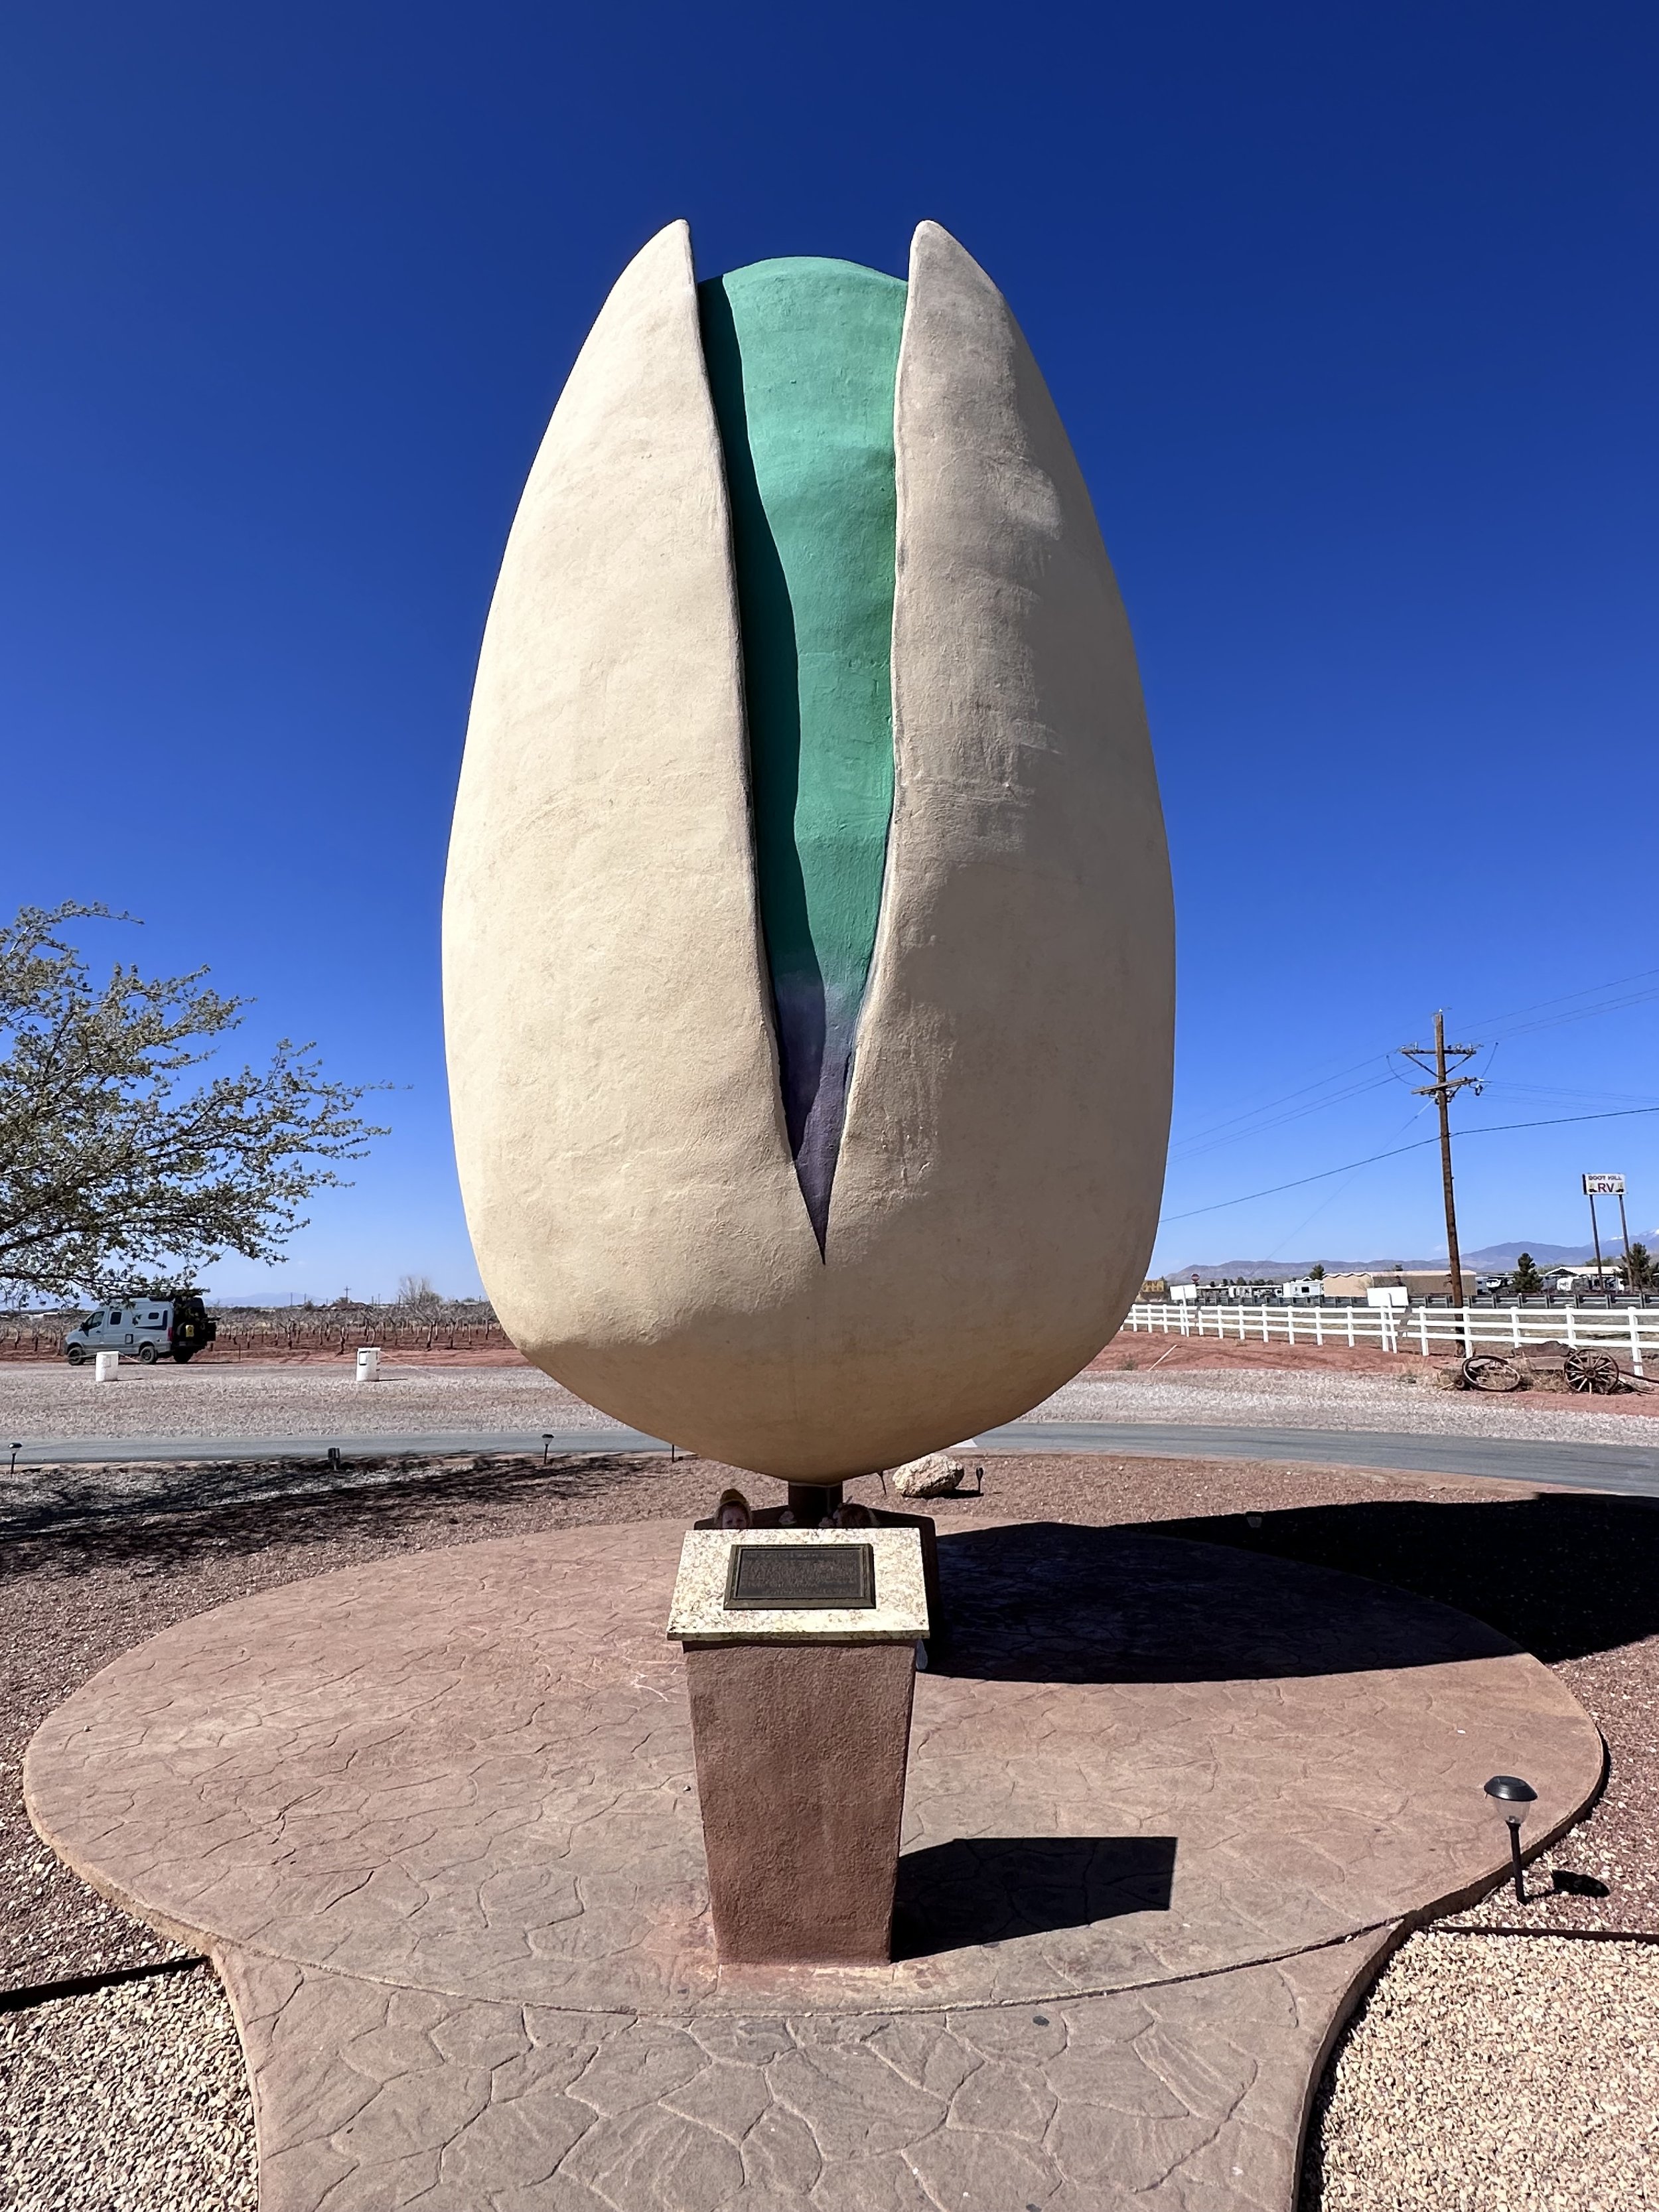 The World’s Largest Pistachio (Alamogordo, NM) — Wonderwall/Wanderlust